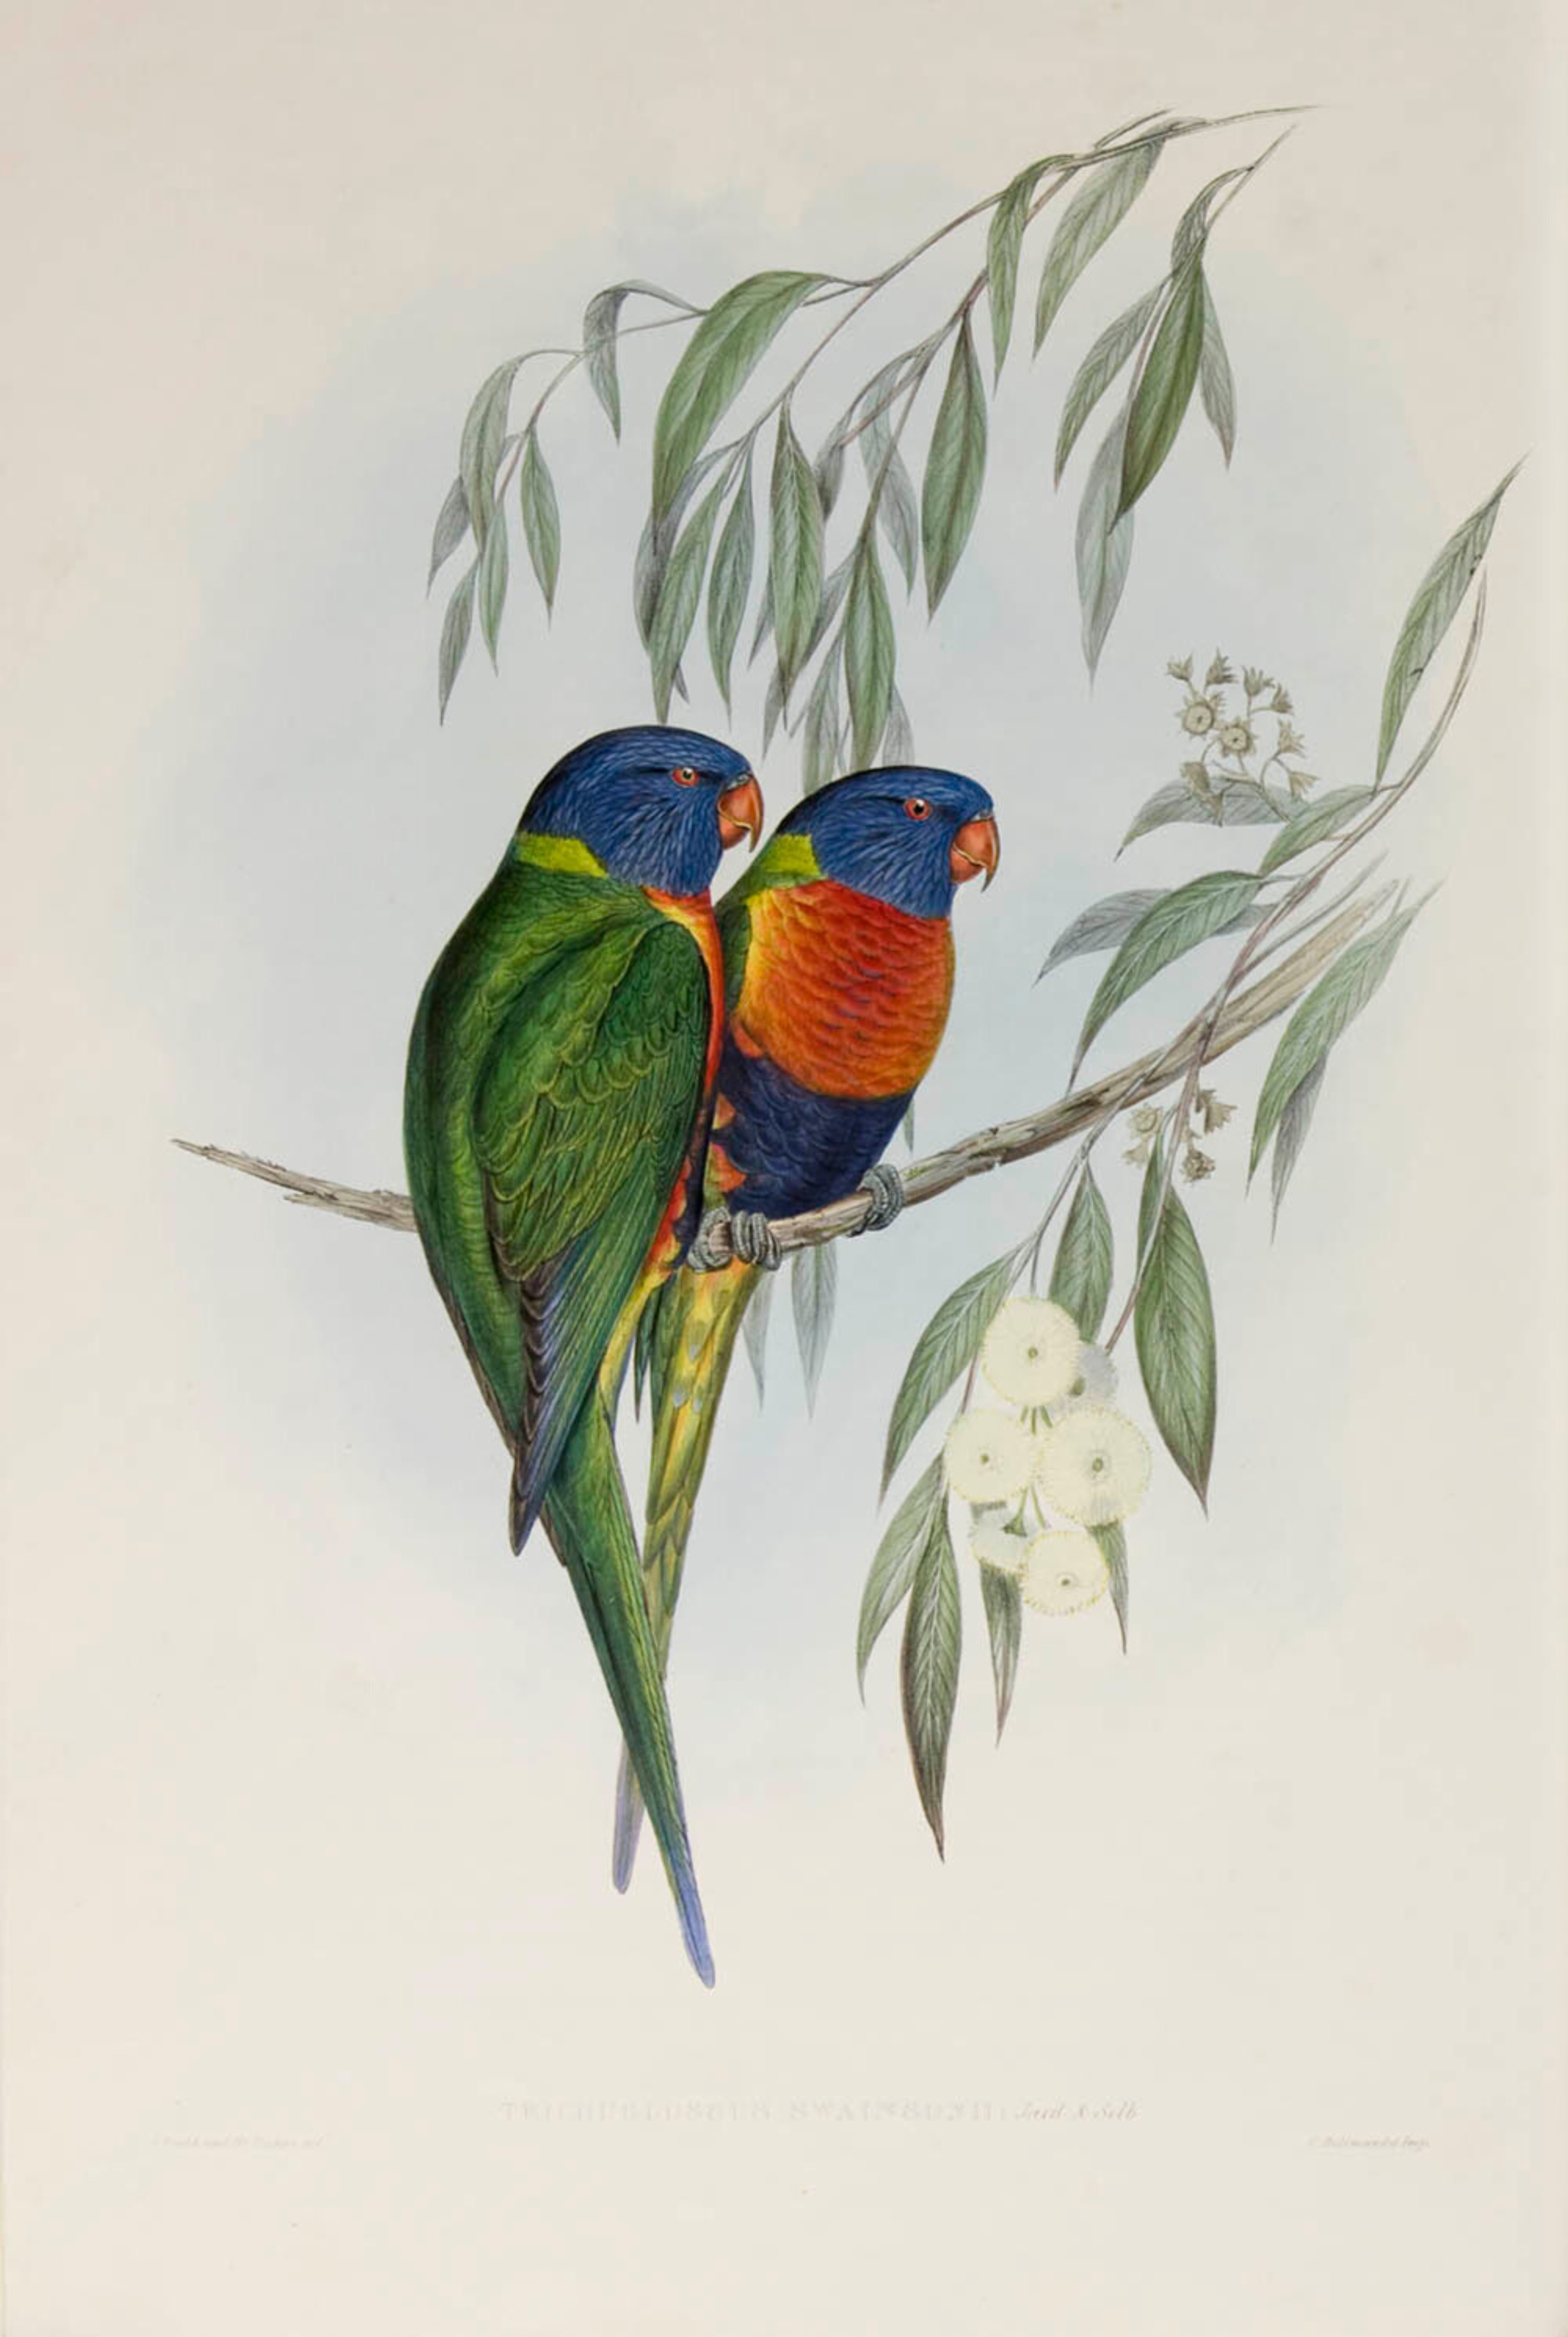 Elizabeth Gould, Trichoglossus Swainsonii (Lori van de Blauwe Bergen) in 'The Birds of Australia', 1848-1870.